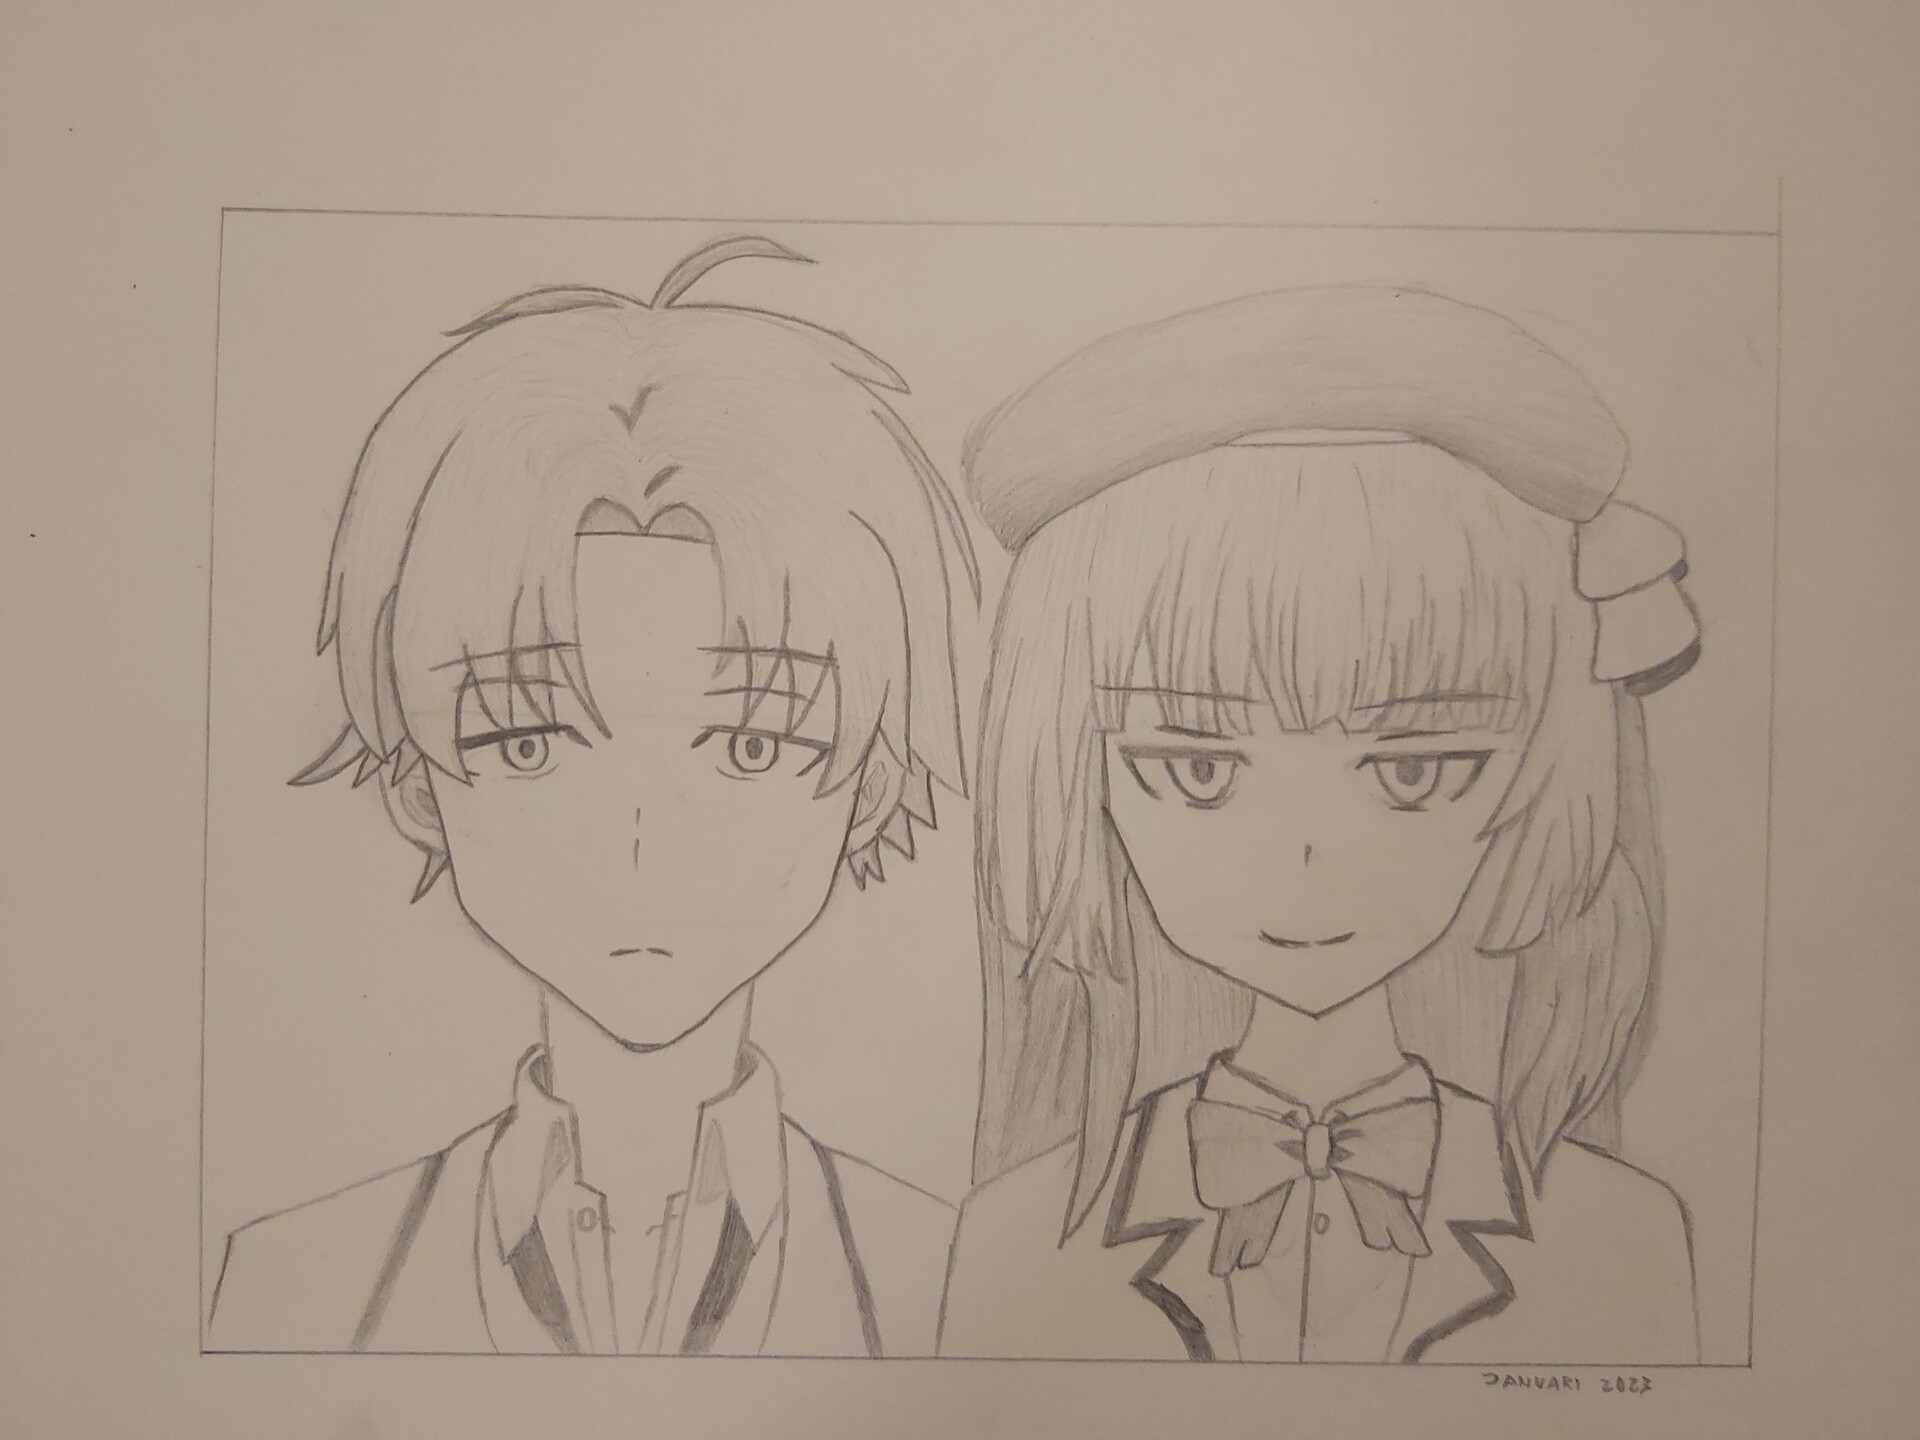 Arisu sakayanagi  Animation art character design, Anime character drawing,  Anime classroom